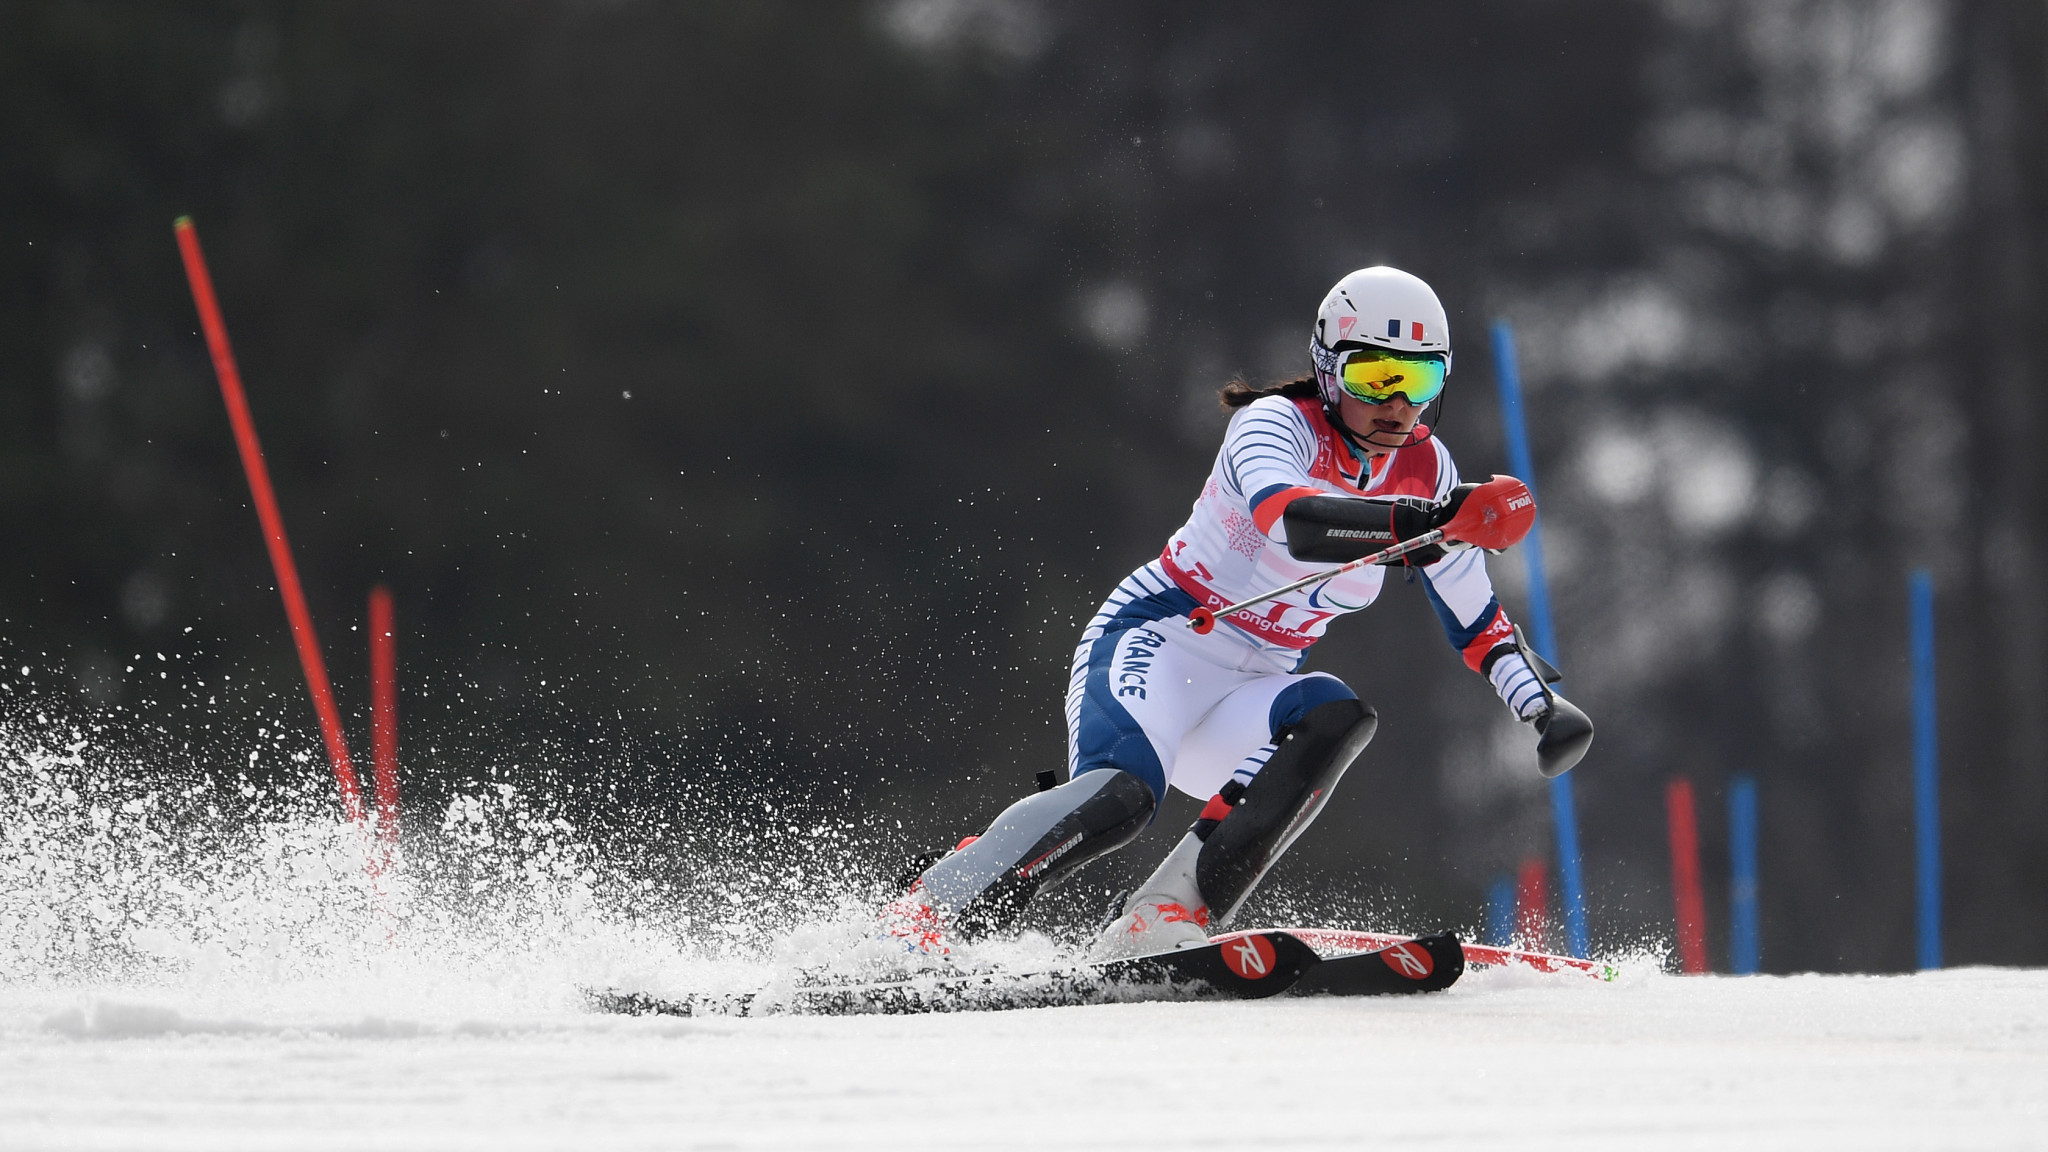 Bochet and Pedersen among stars at Para Alpine Skiing World Cup in St Moritz